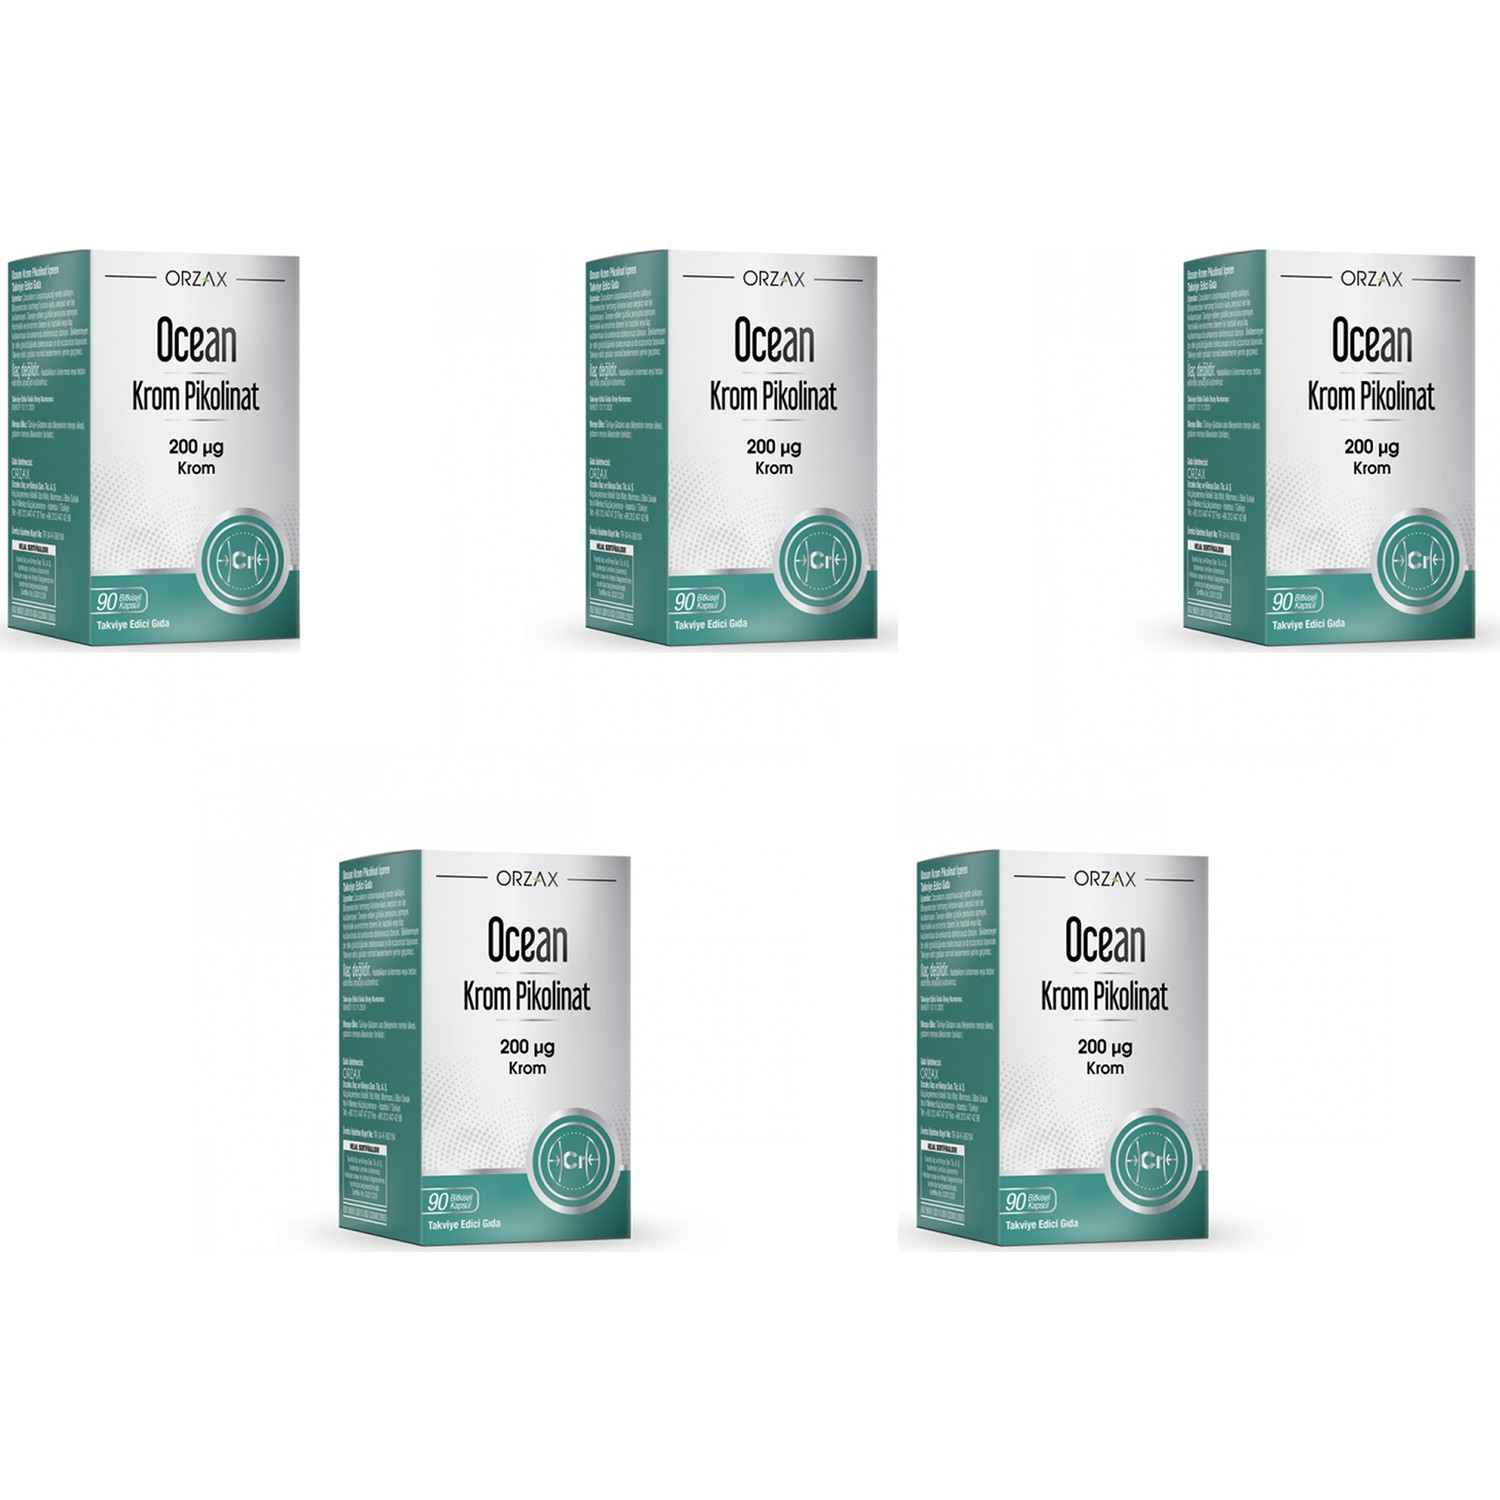 Пиколинат хрома Orzax Ocean 200 мкг, 5 упаковок по 90 травяных капсул atech nutrition premium chrome picolinate